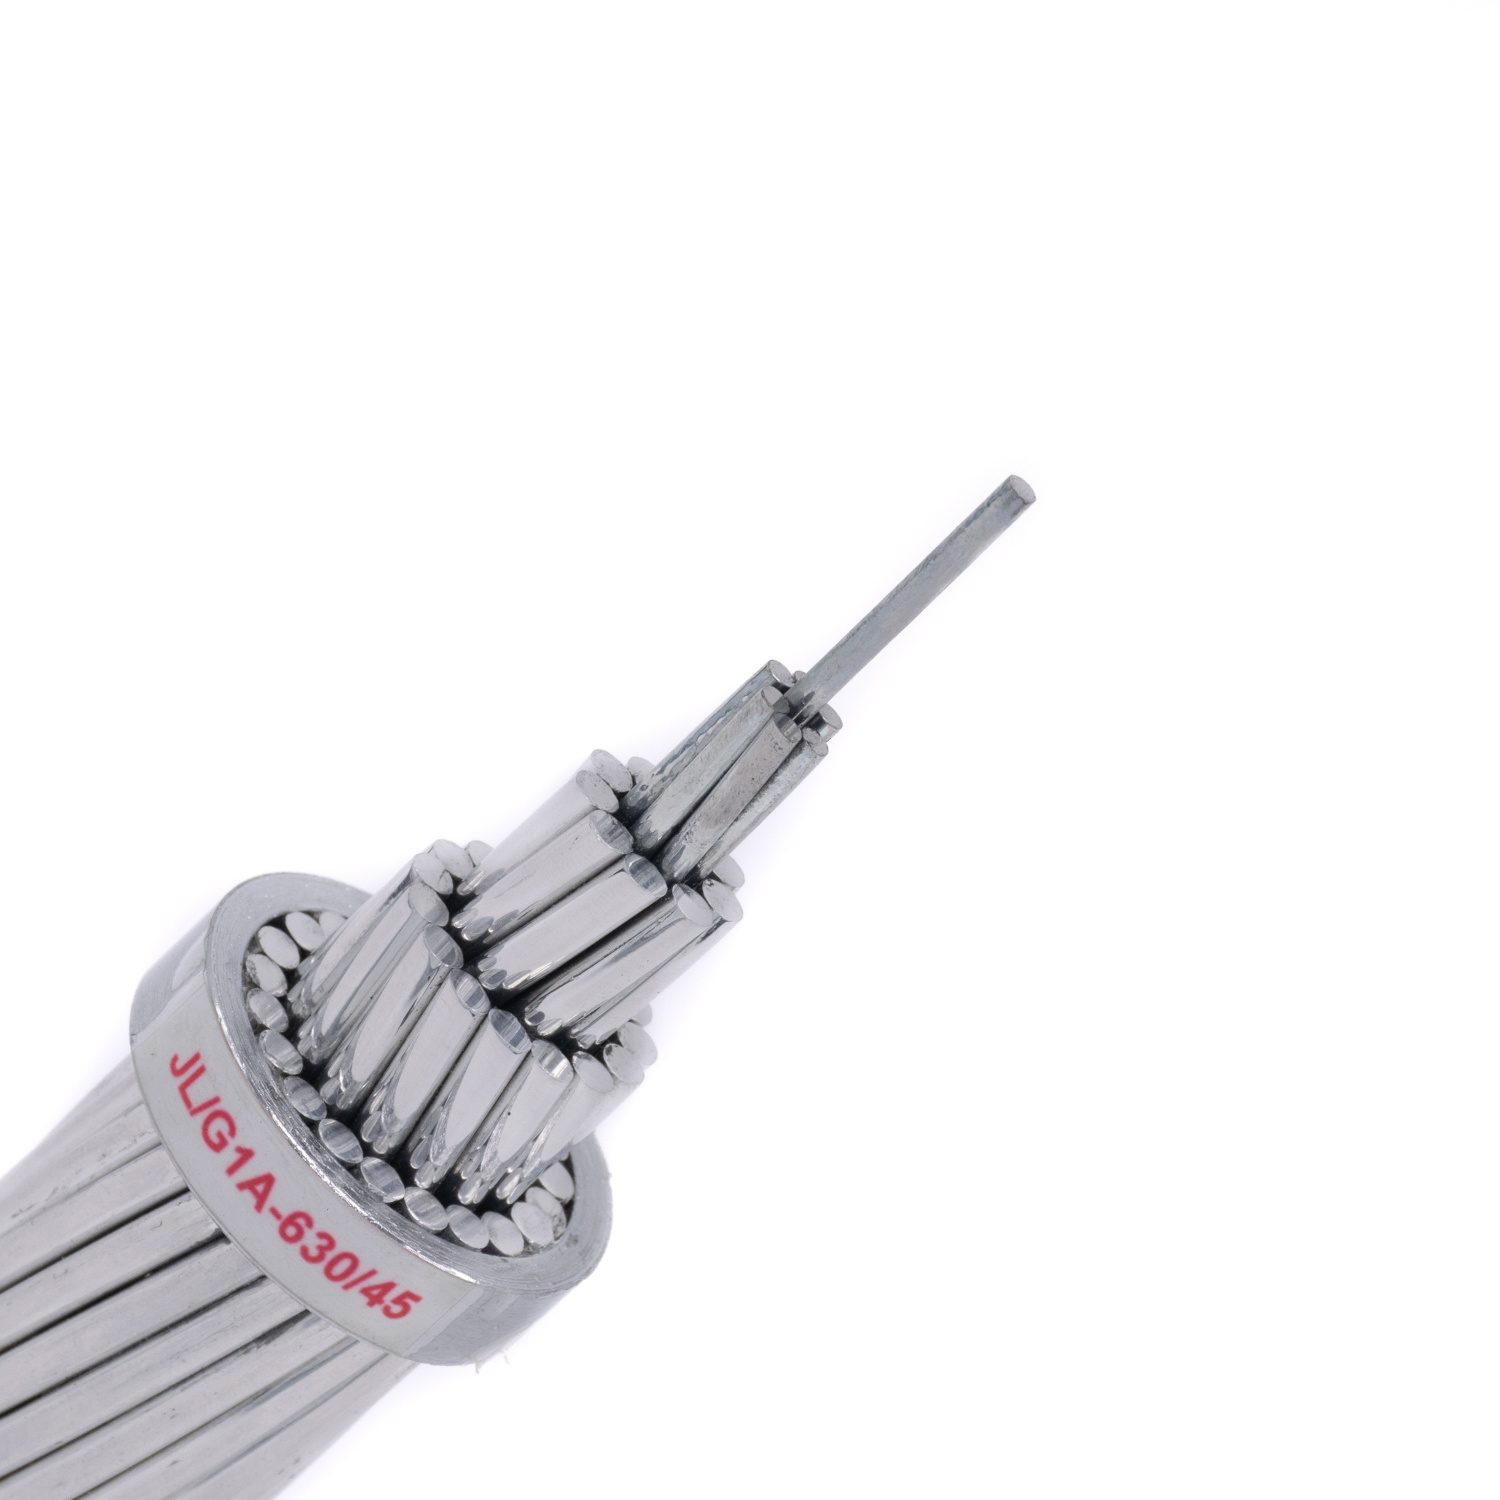 
                La norma DIN 48204 Cable de aluminio reforzado con acero desnudo conductores ACSR
            